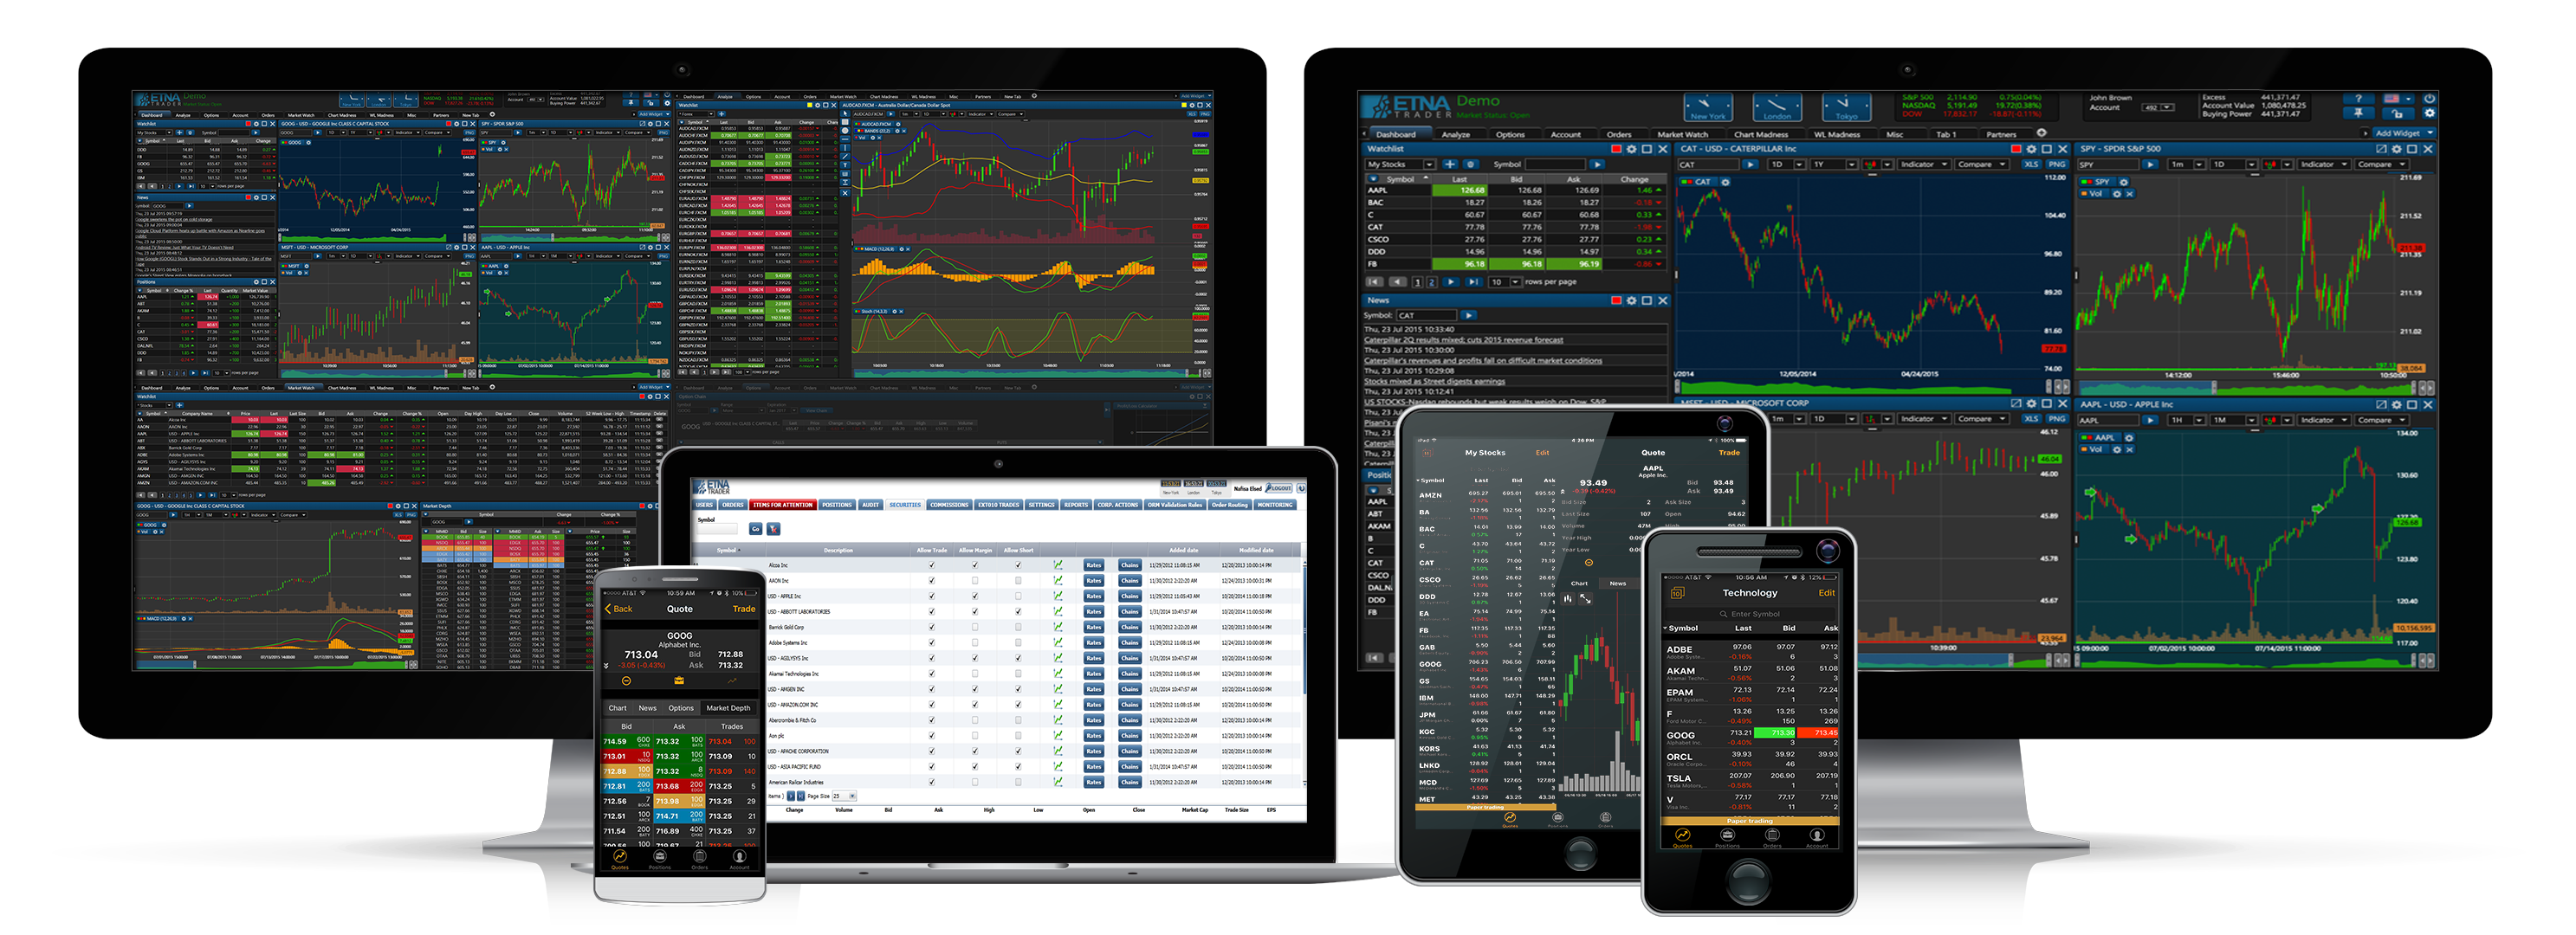 Virtual Stock And Options Trading Simulator Etna Trader - 